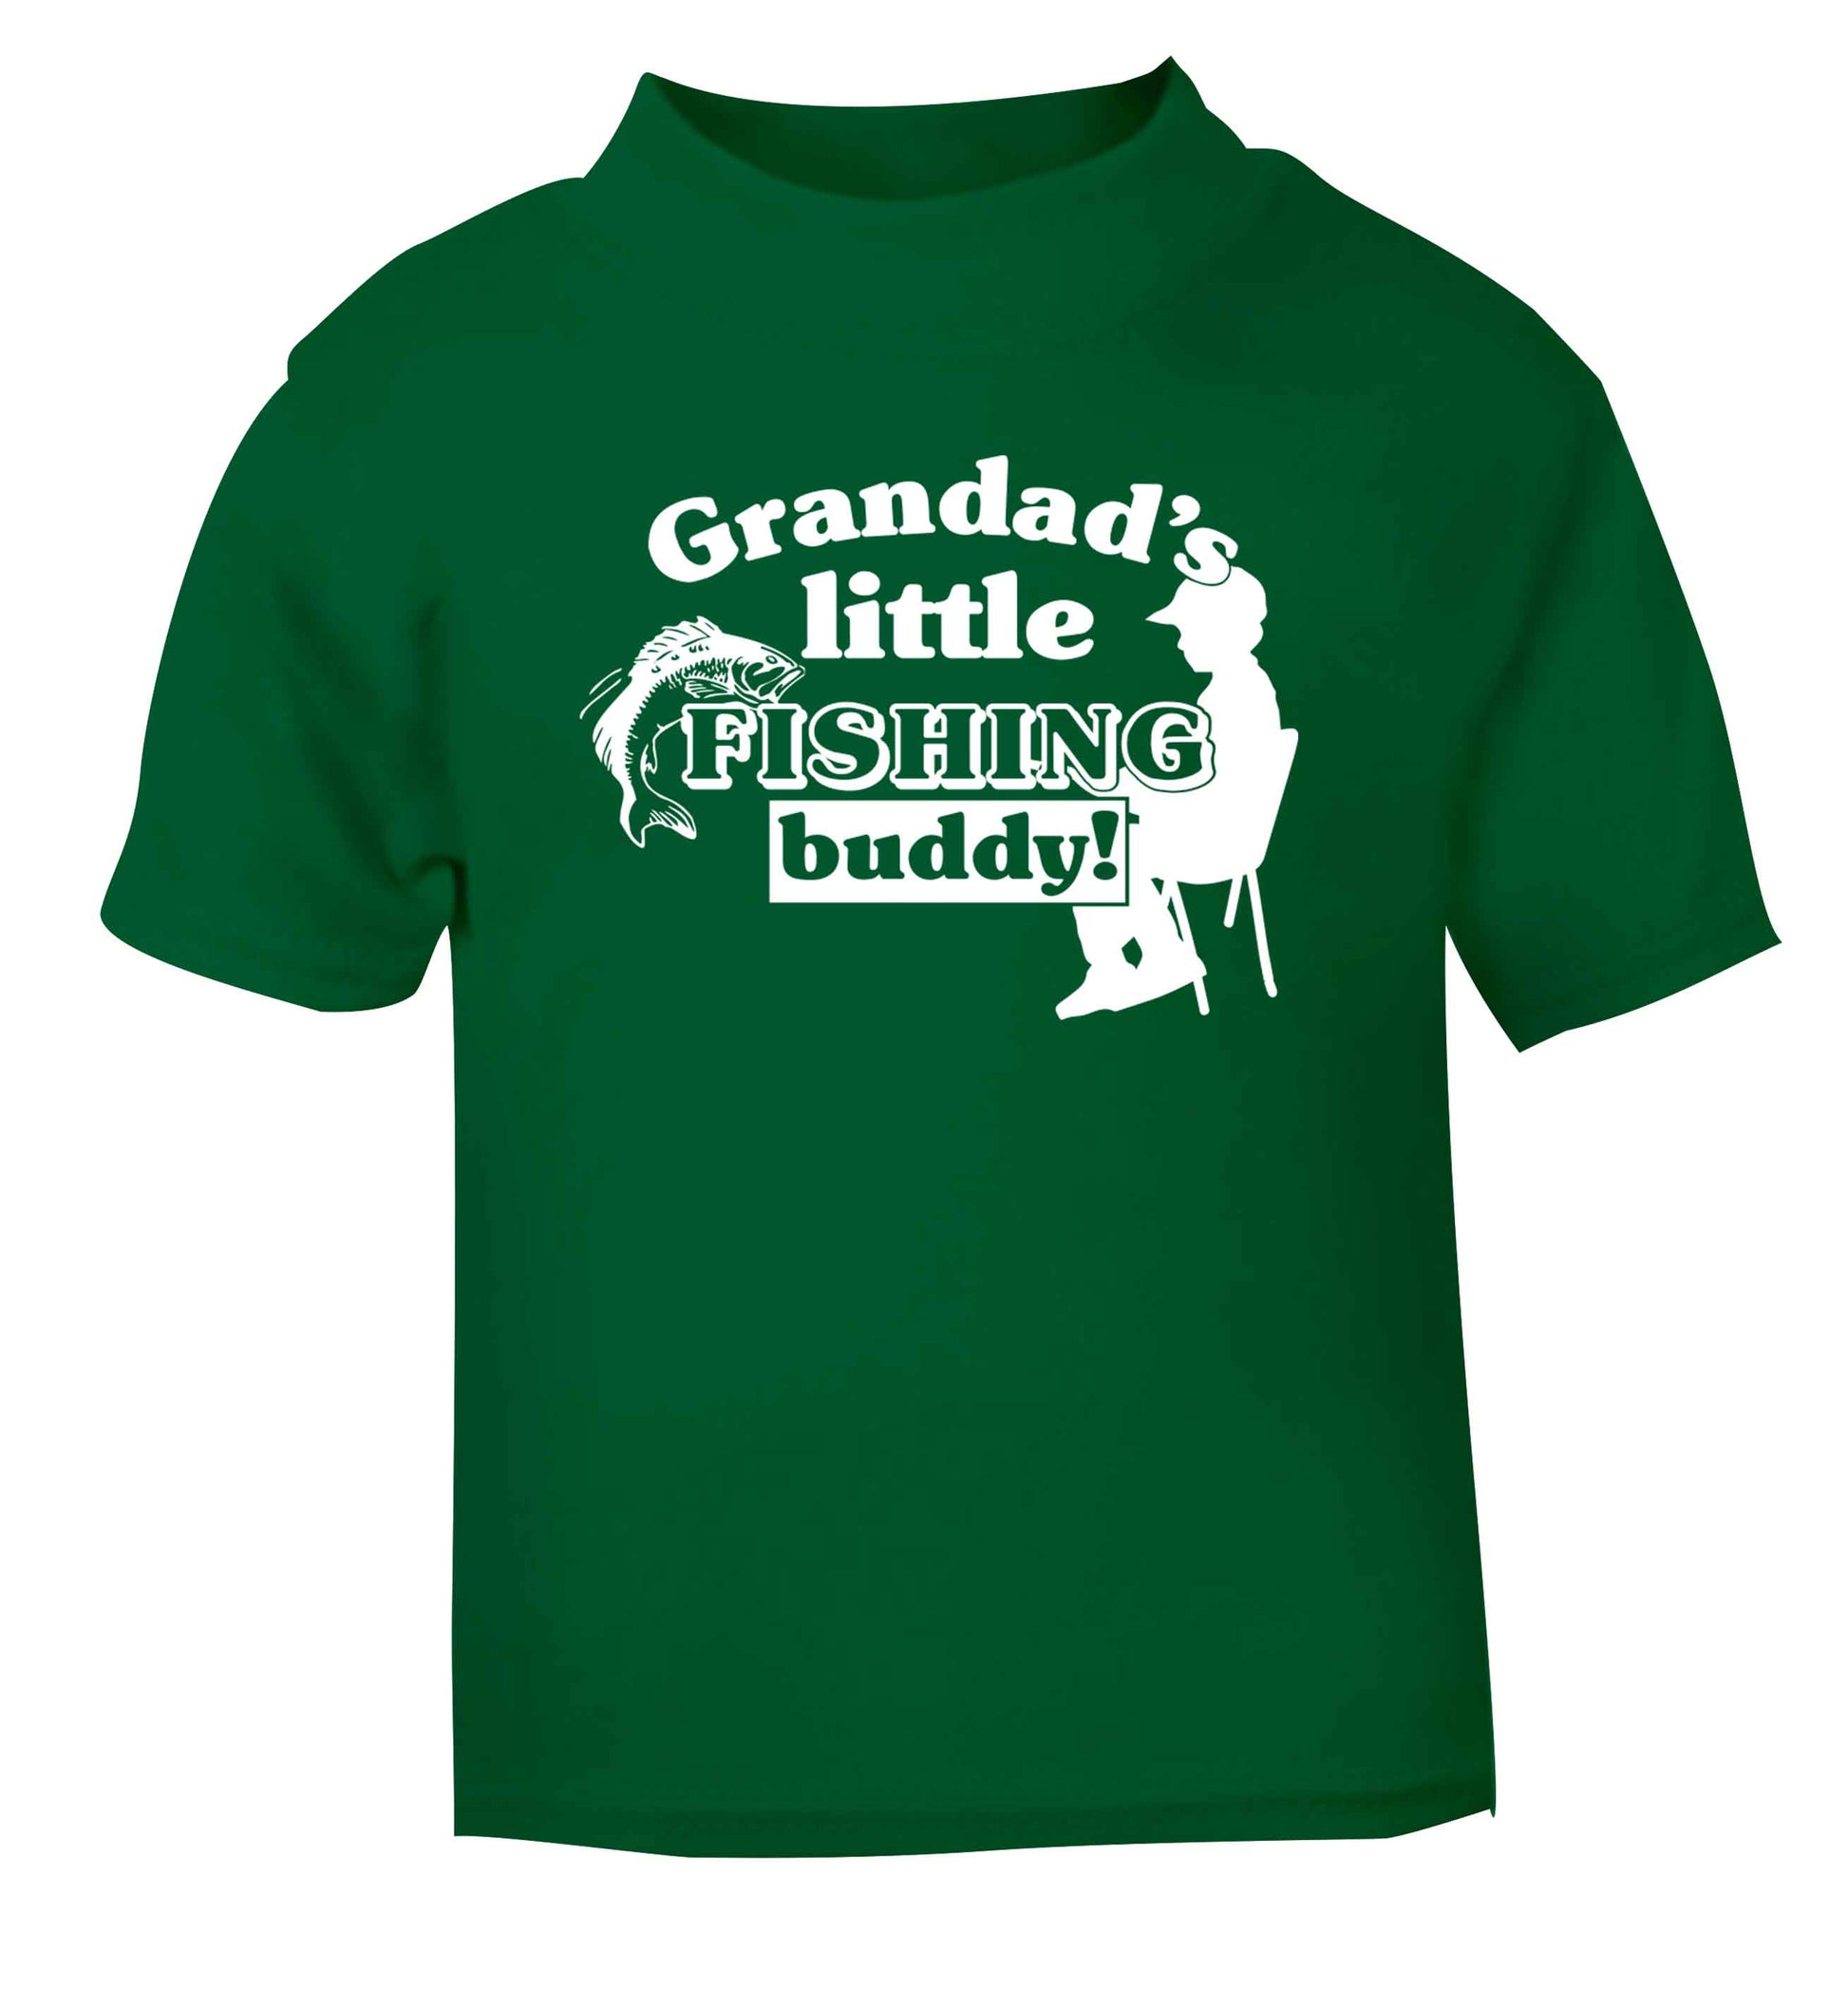 Grandad's little fishing buddy! green Baby Toddler Tshirt 2 Years